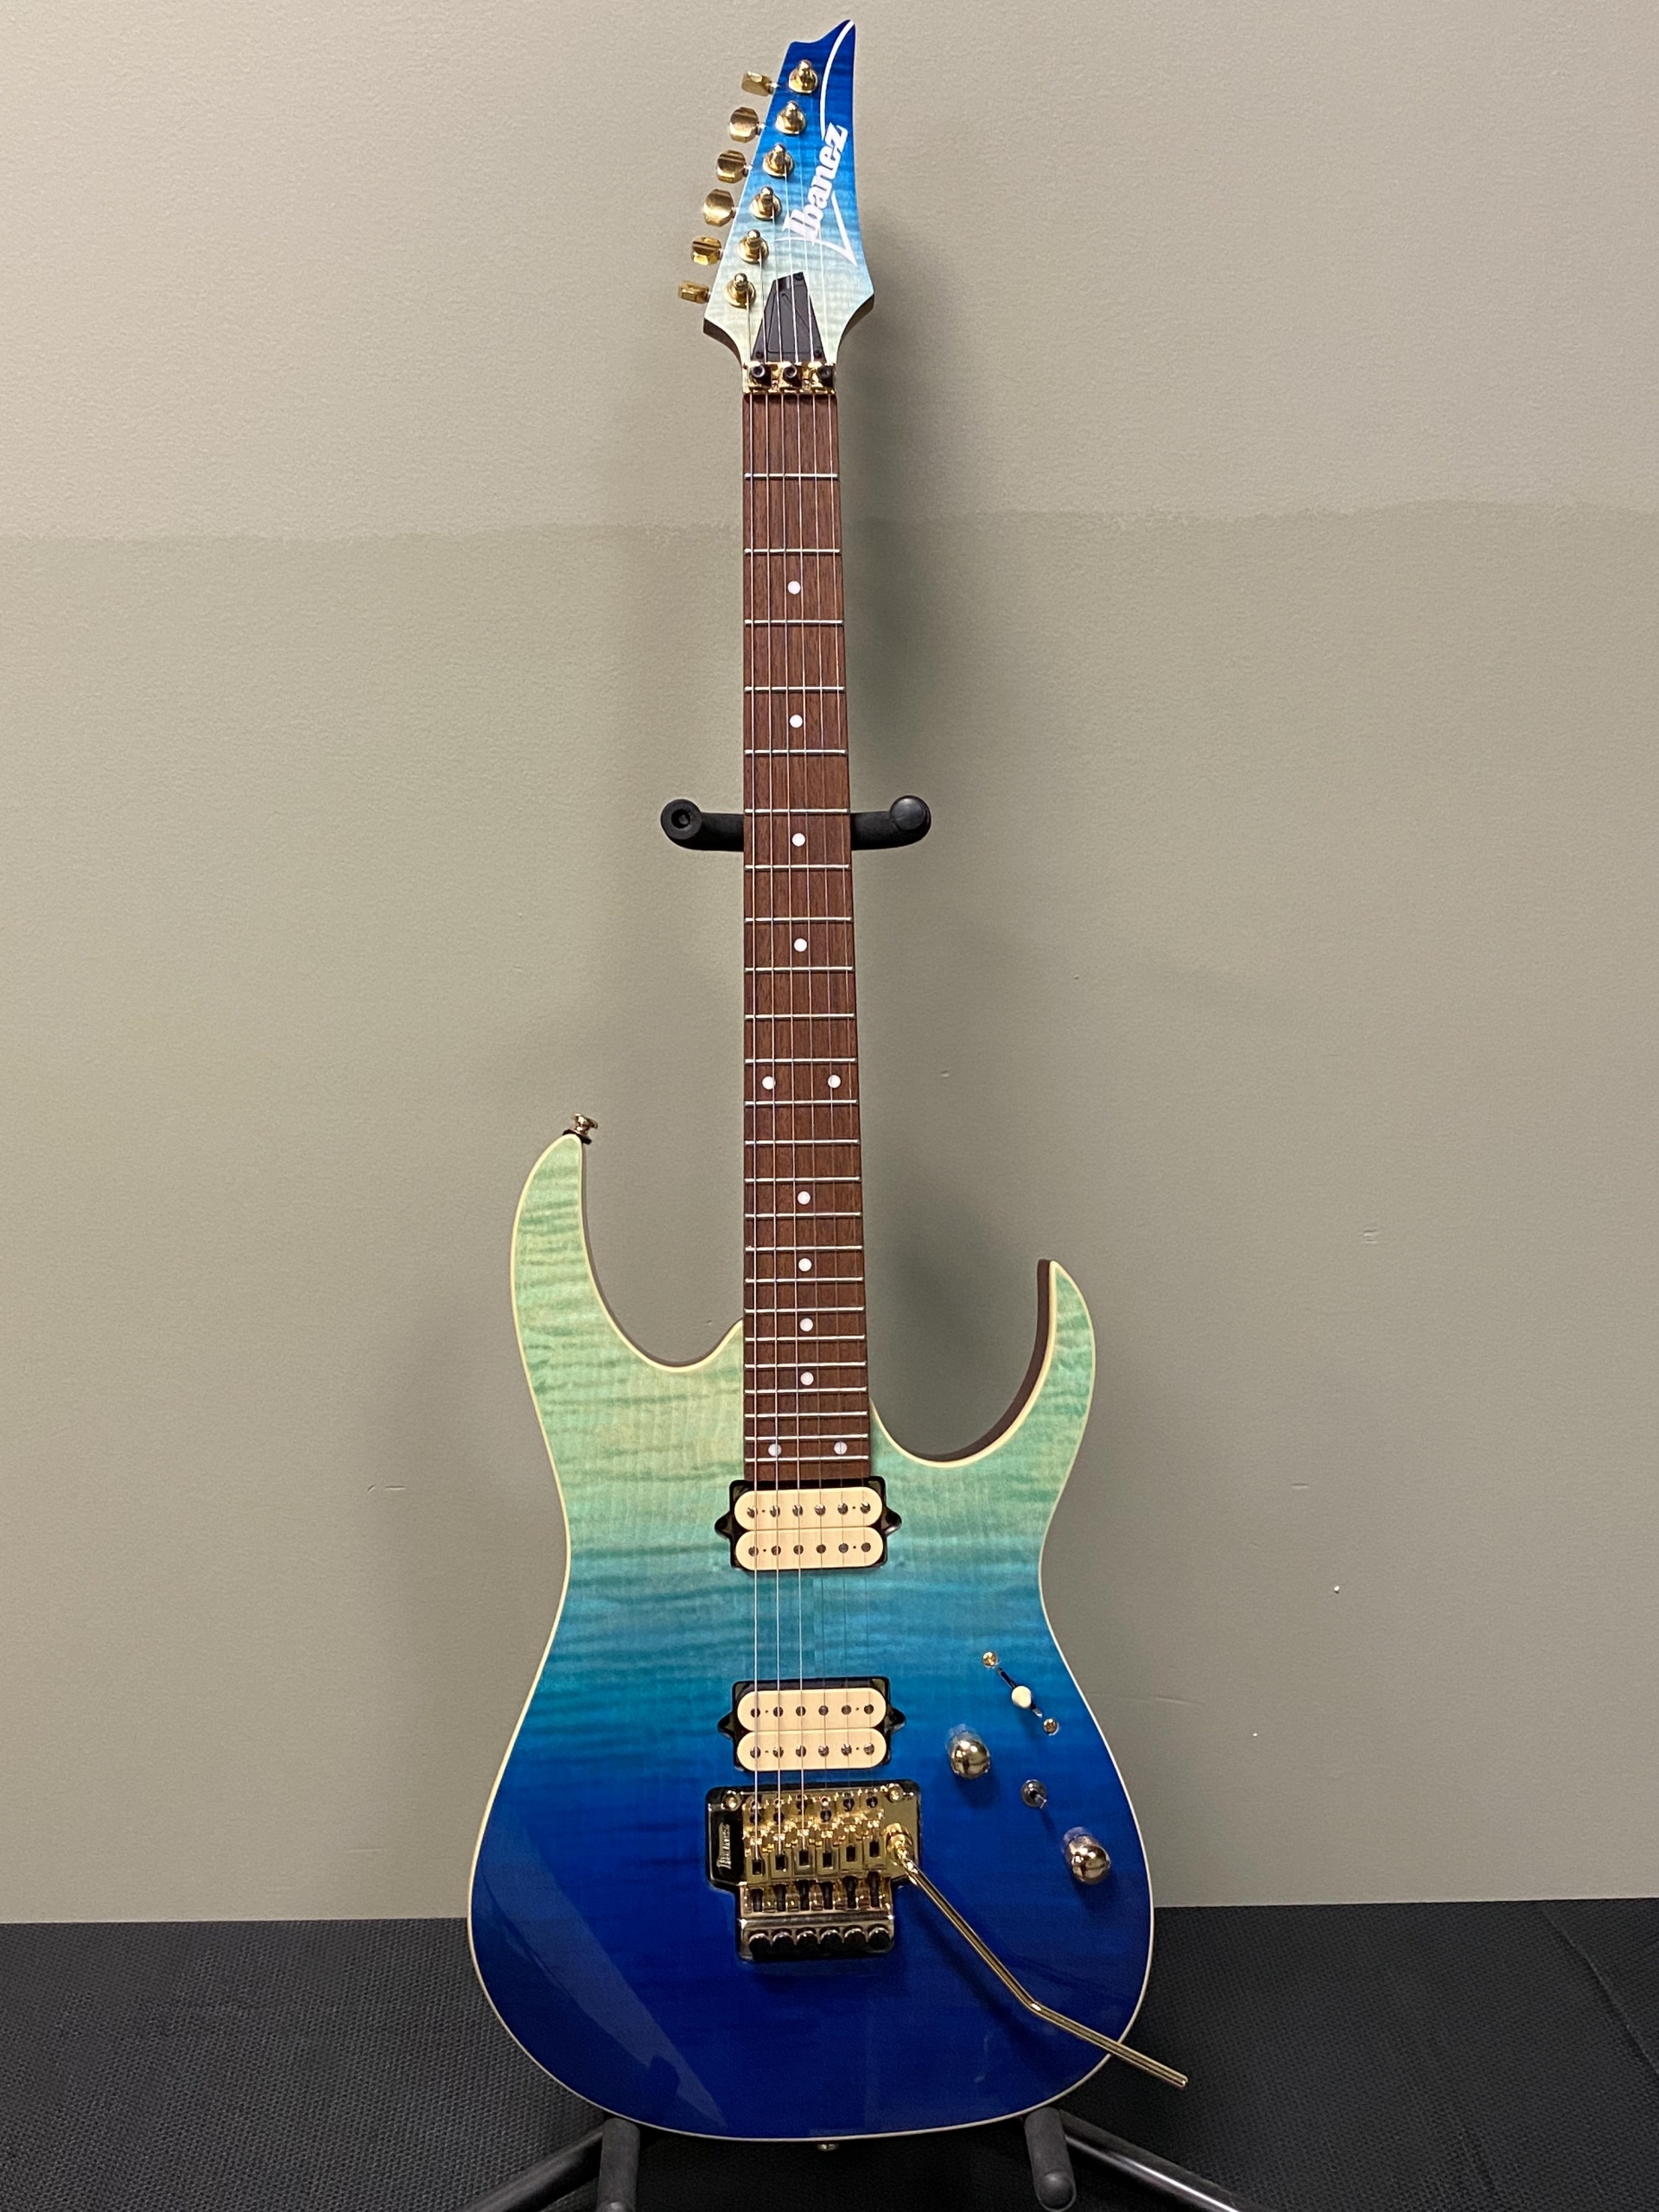 Ibanez light blue to dark blue guitar